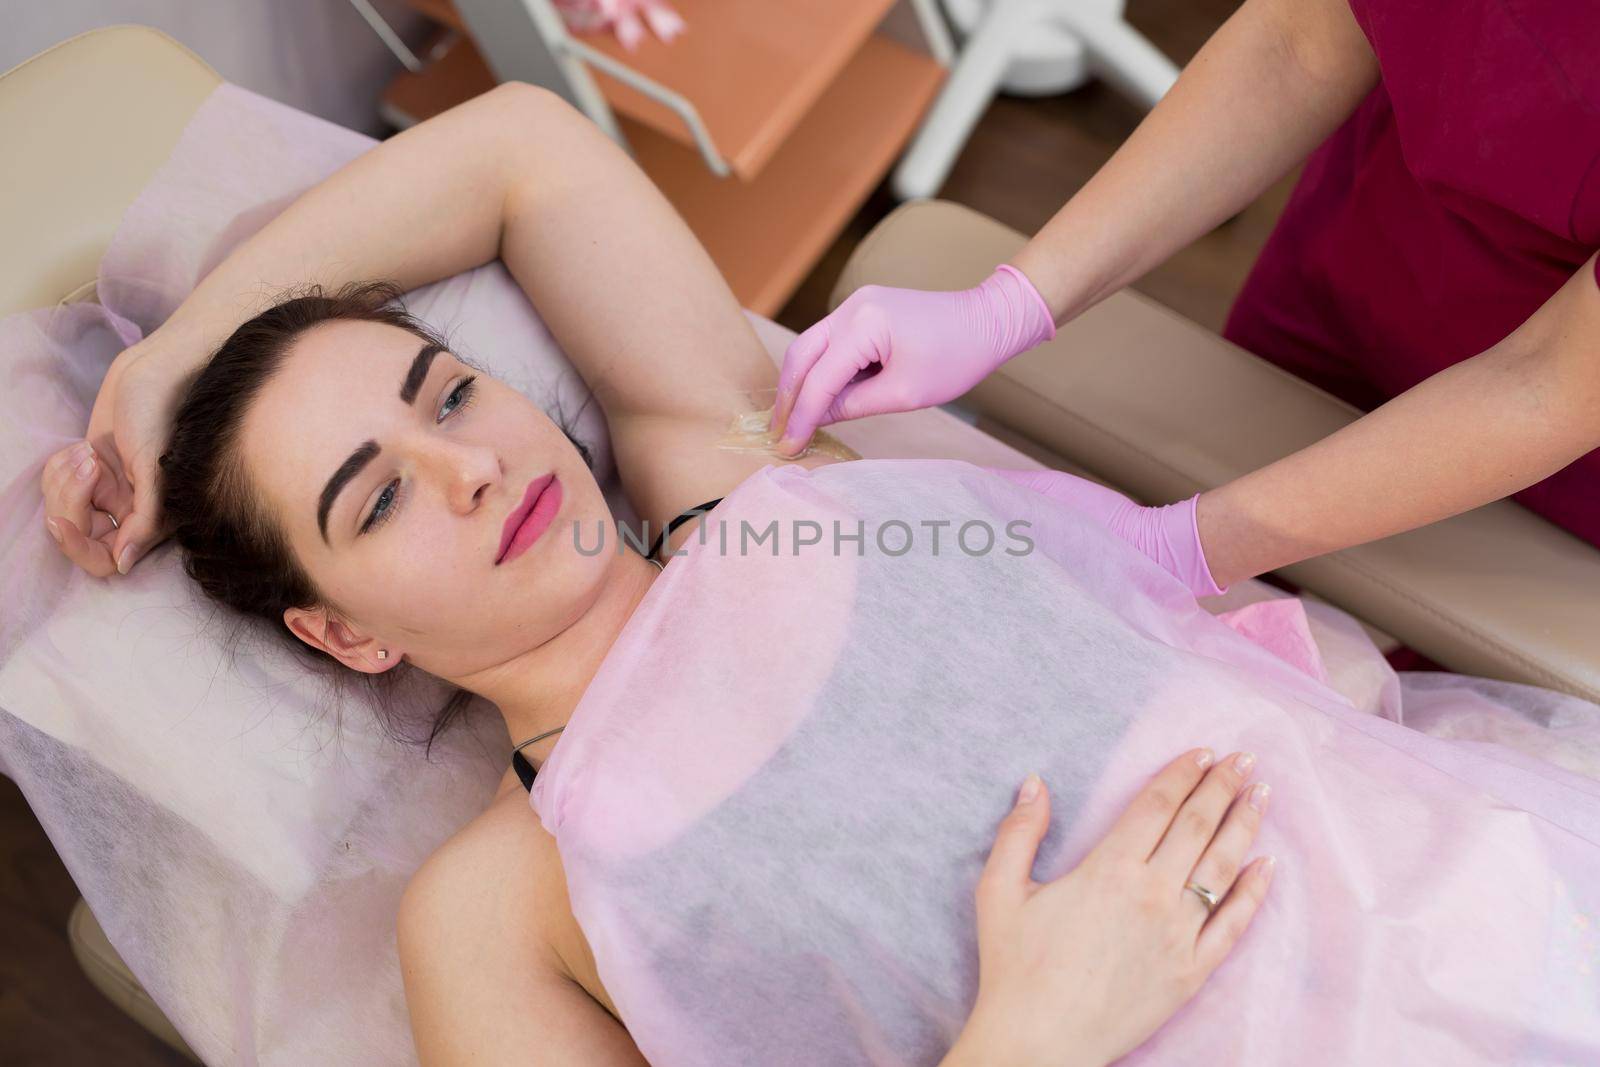 master of sugaring puts paste on the girl's armpits. Professional woman at spa beauty salon doing epilation armpits using sugar. Sugaring. by StudioPeace